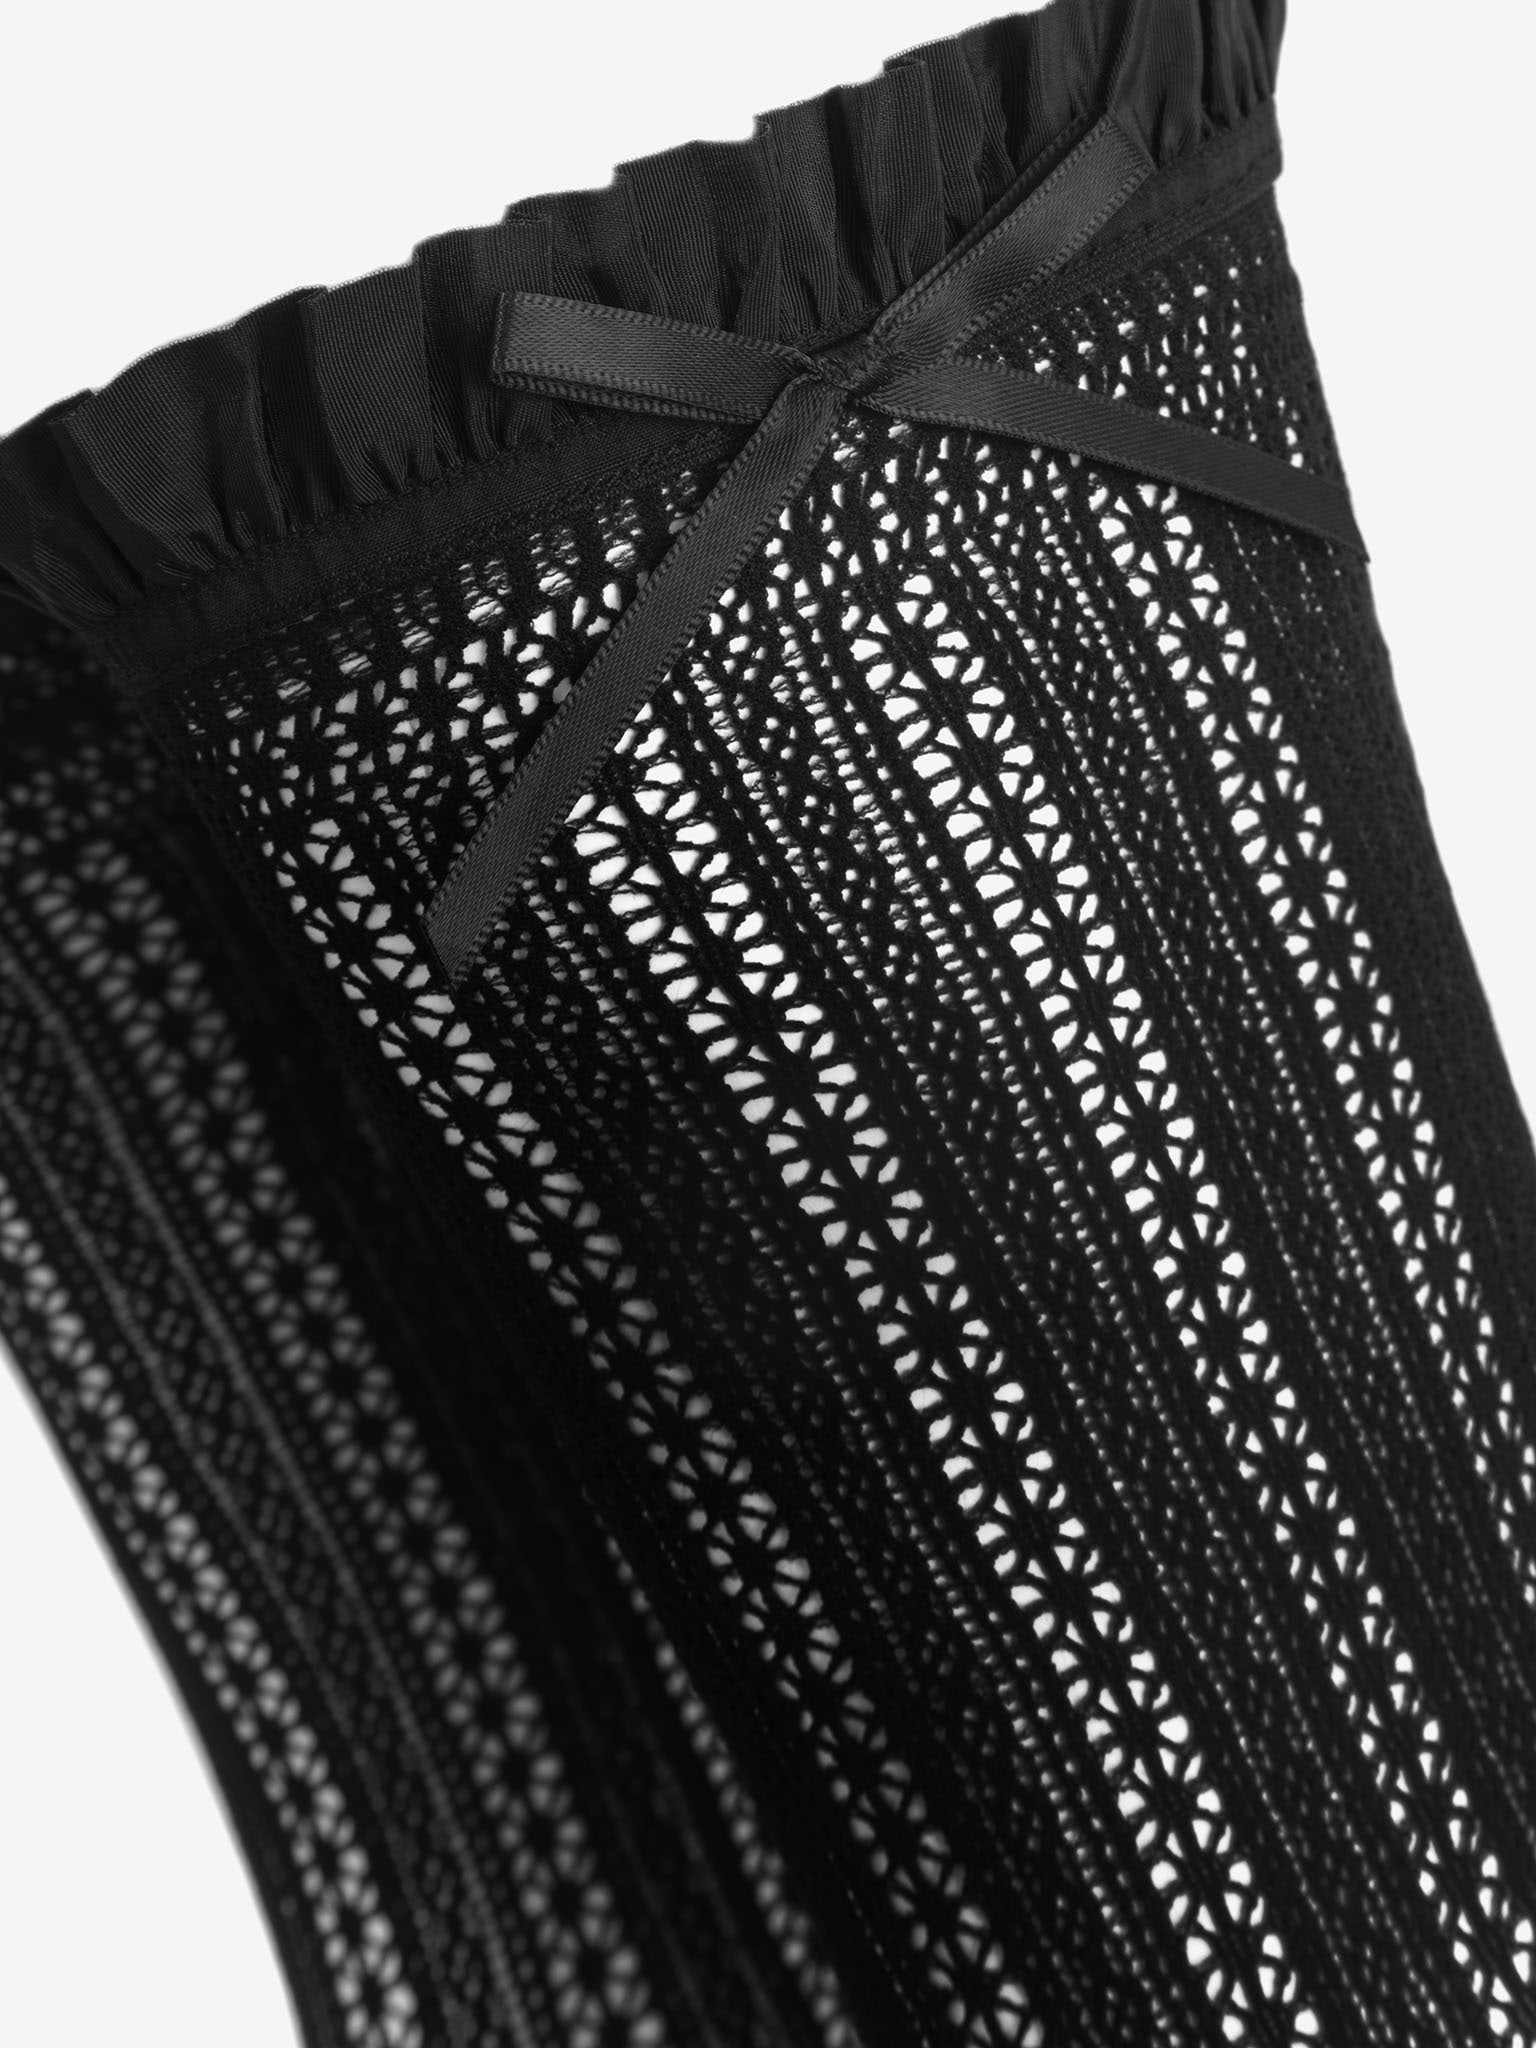 LICHI - Online fashion store :: Openwork knee socks with bows